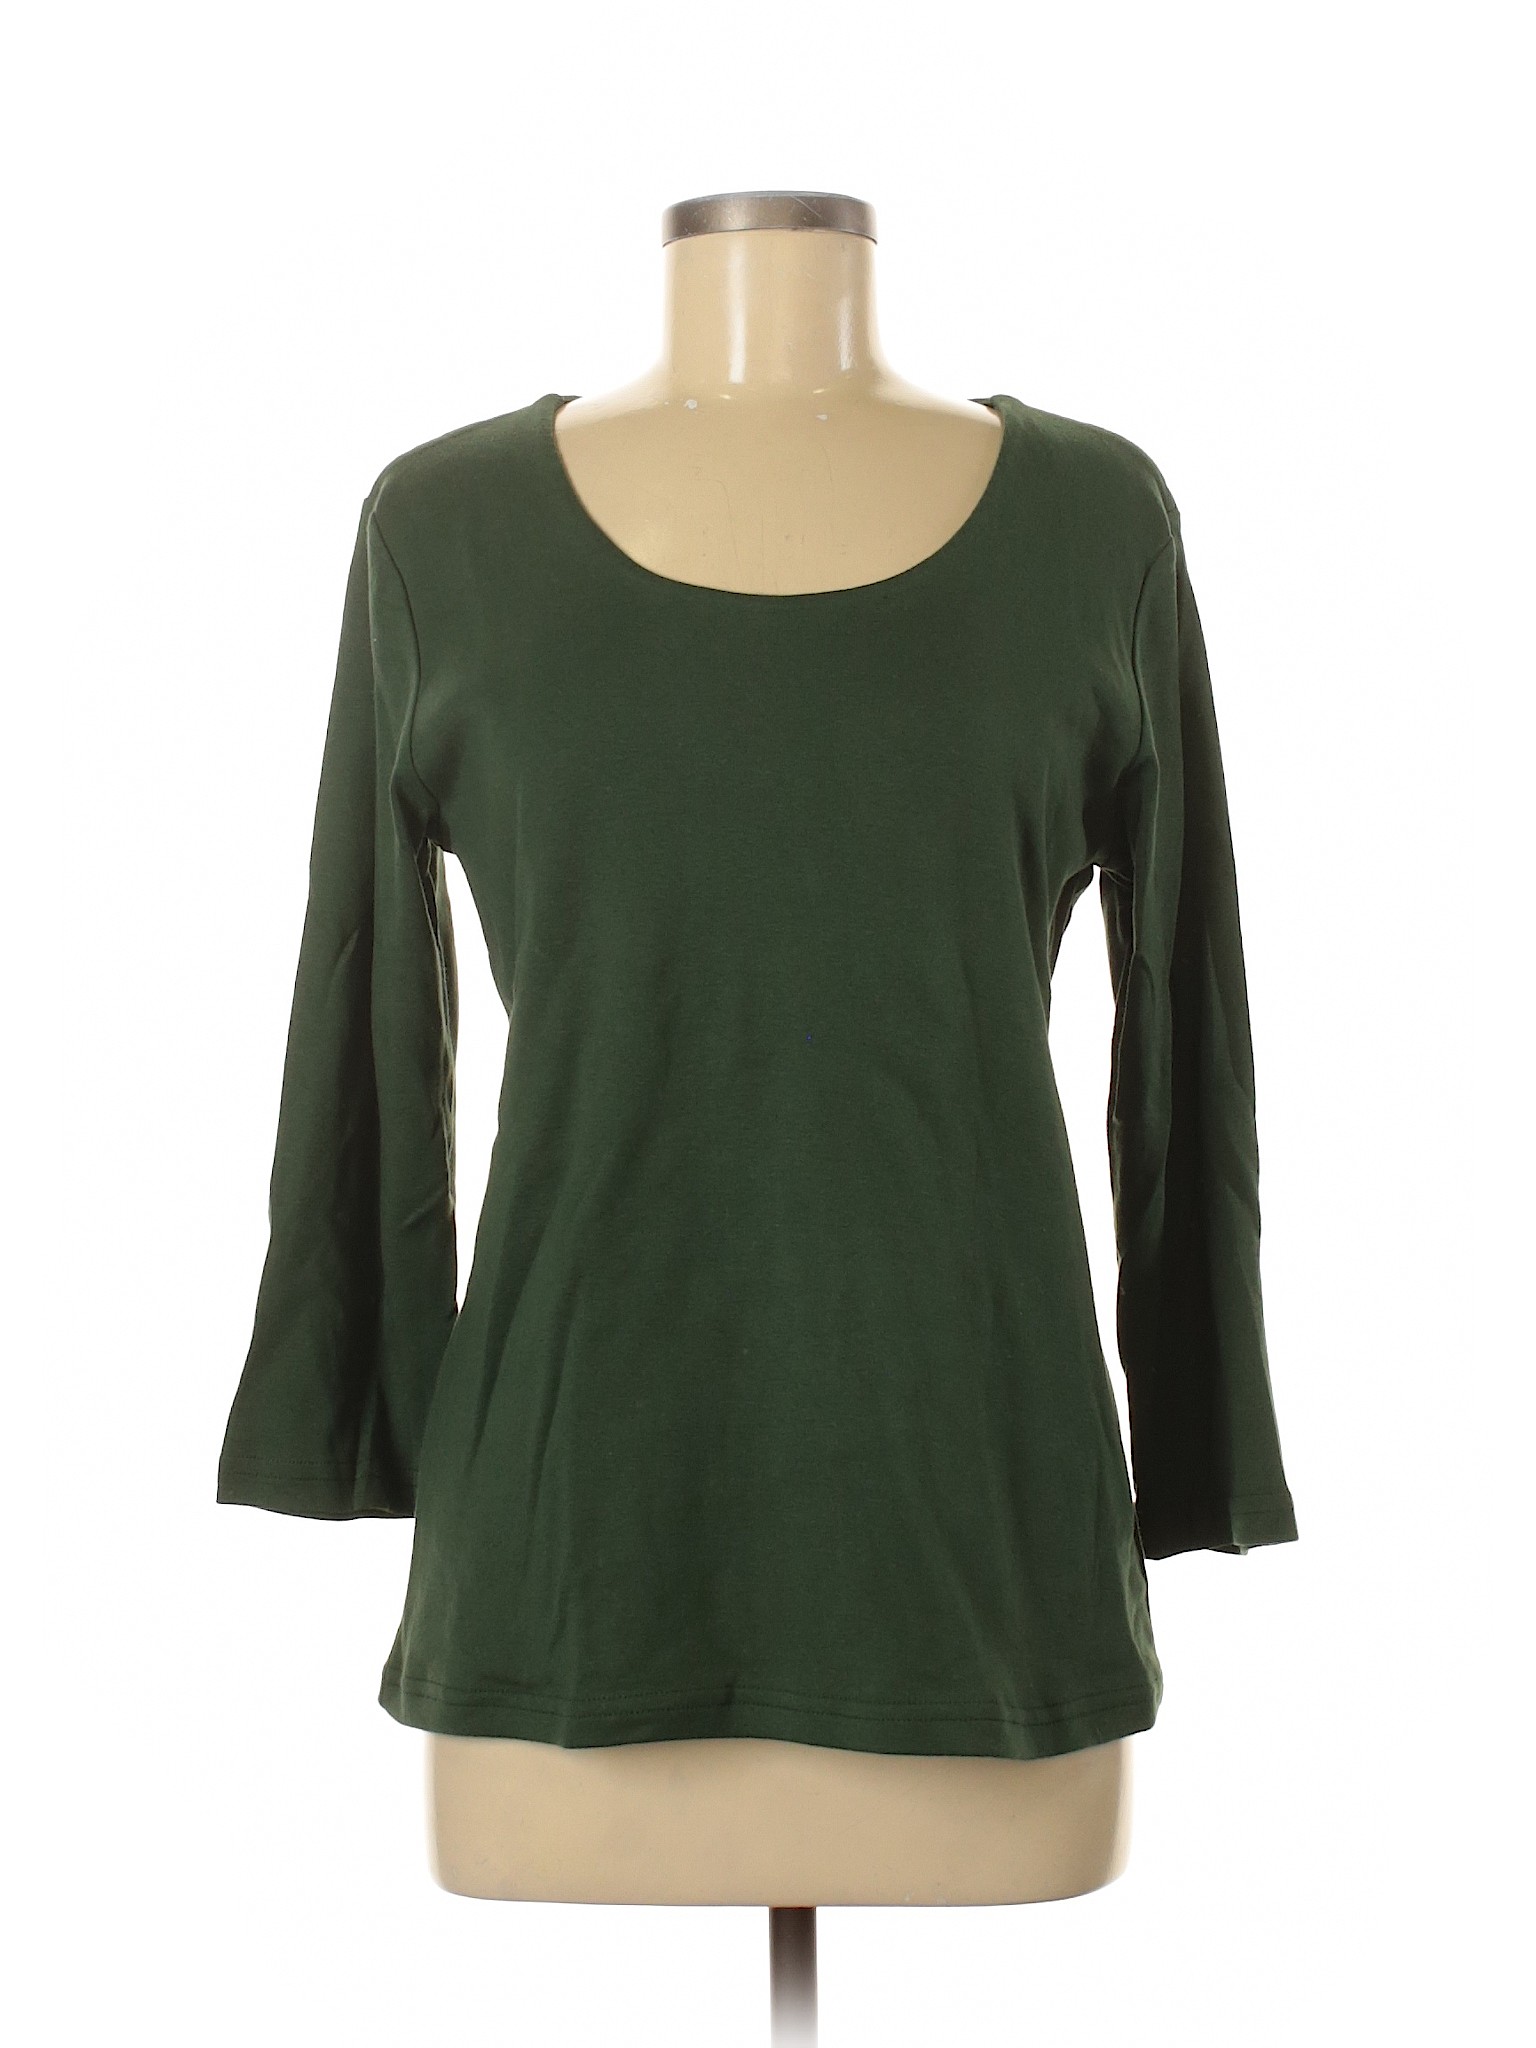 Monterey Bay Clothing Company Women Green 3/4 Sleeve T-Shirt M | eBay